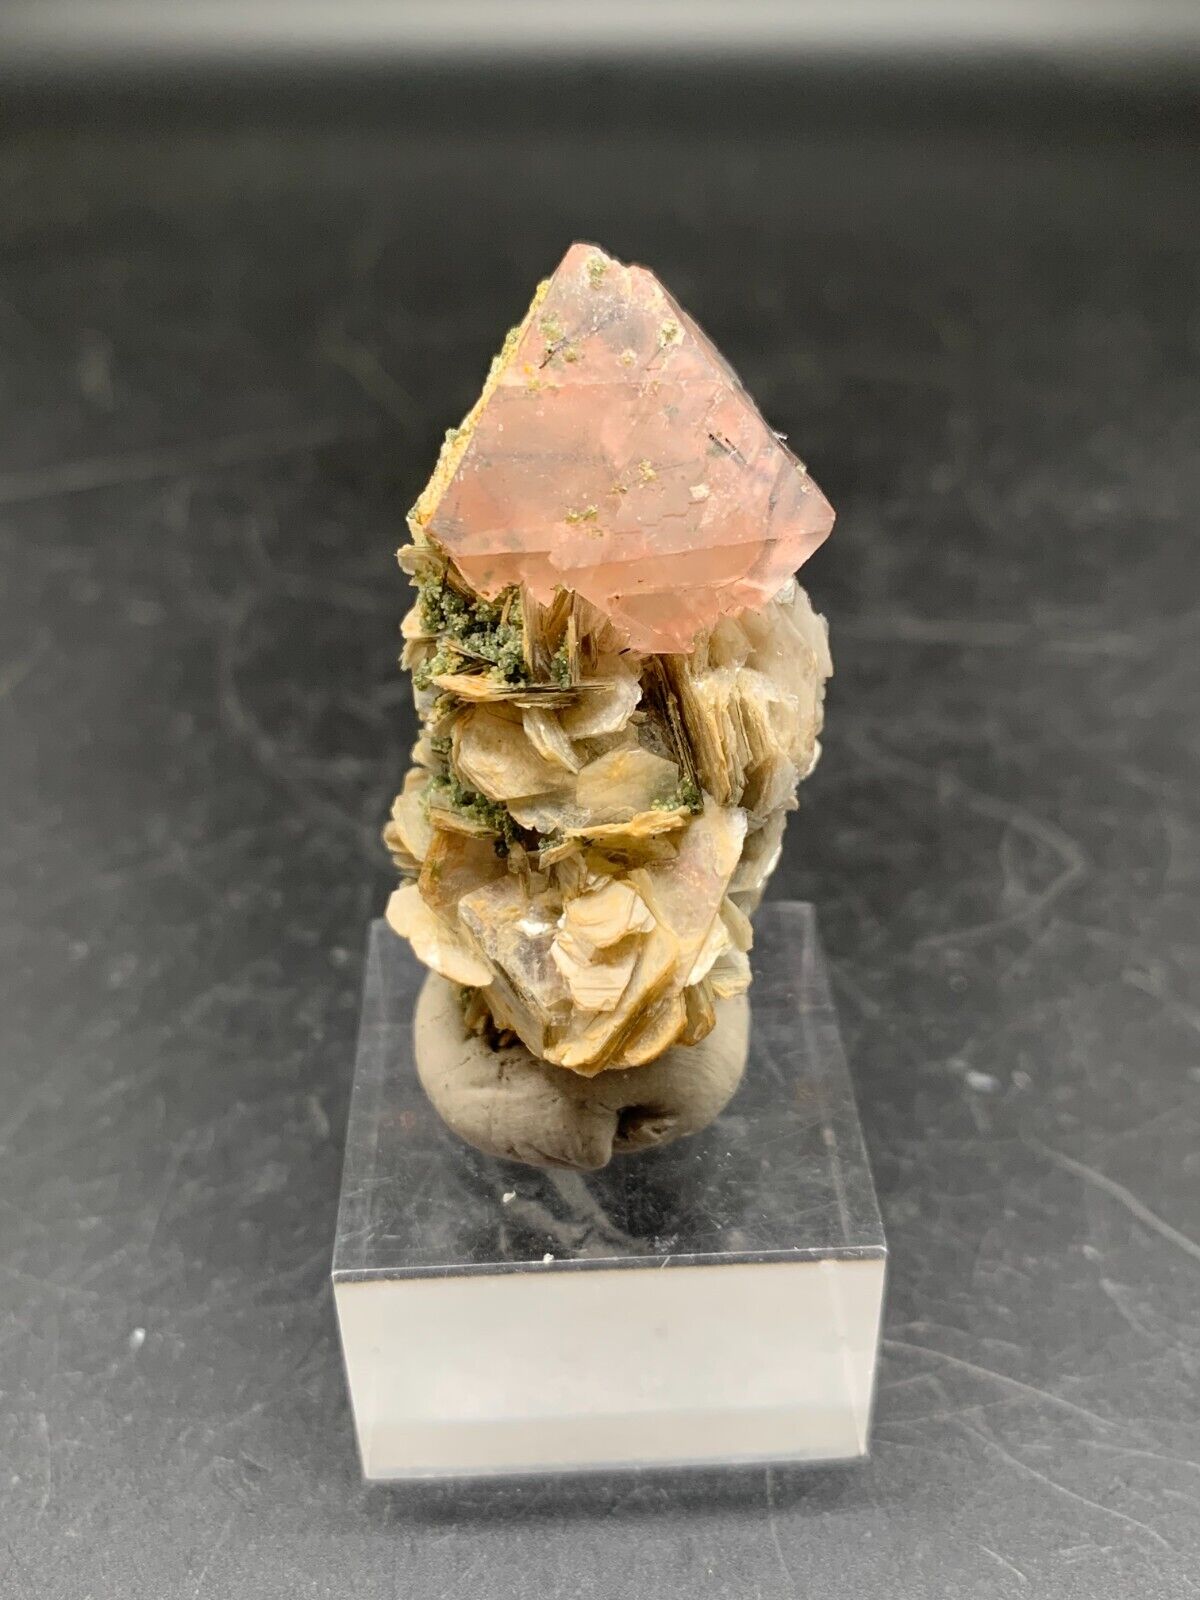 22.2 Gram Very Unique Terminated Pink Fluorite Crystal On Muscovite Matrix.